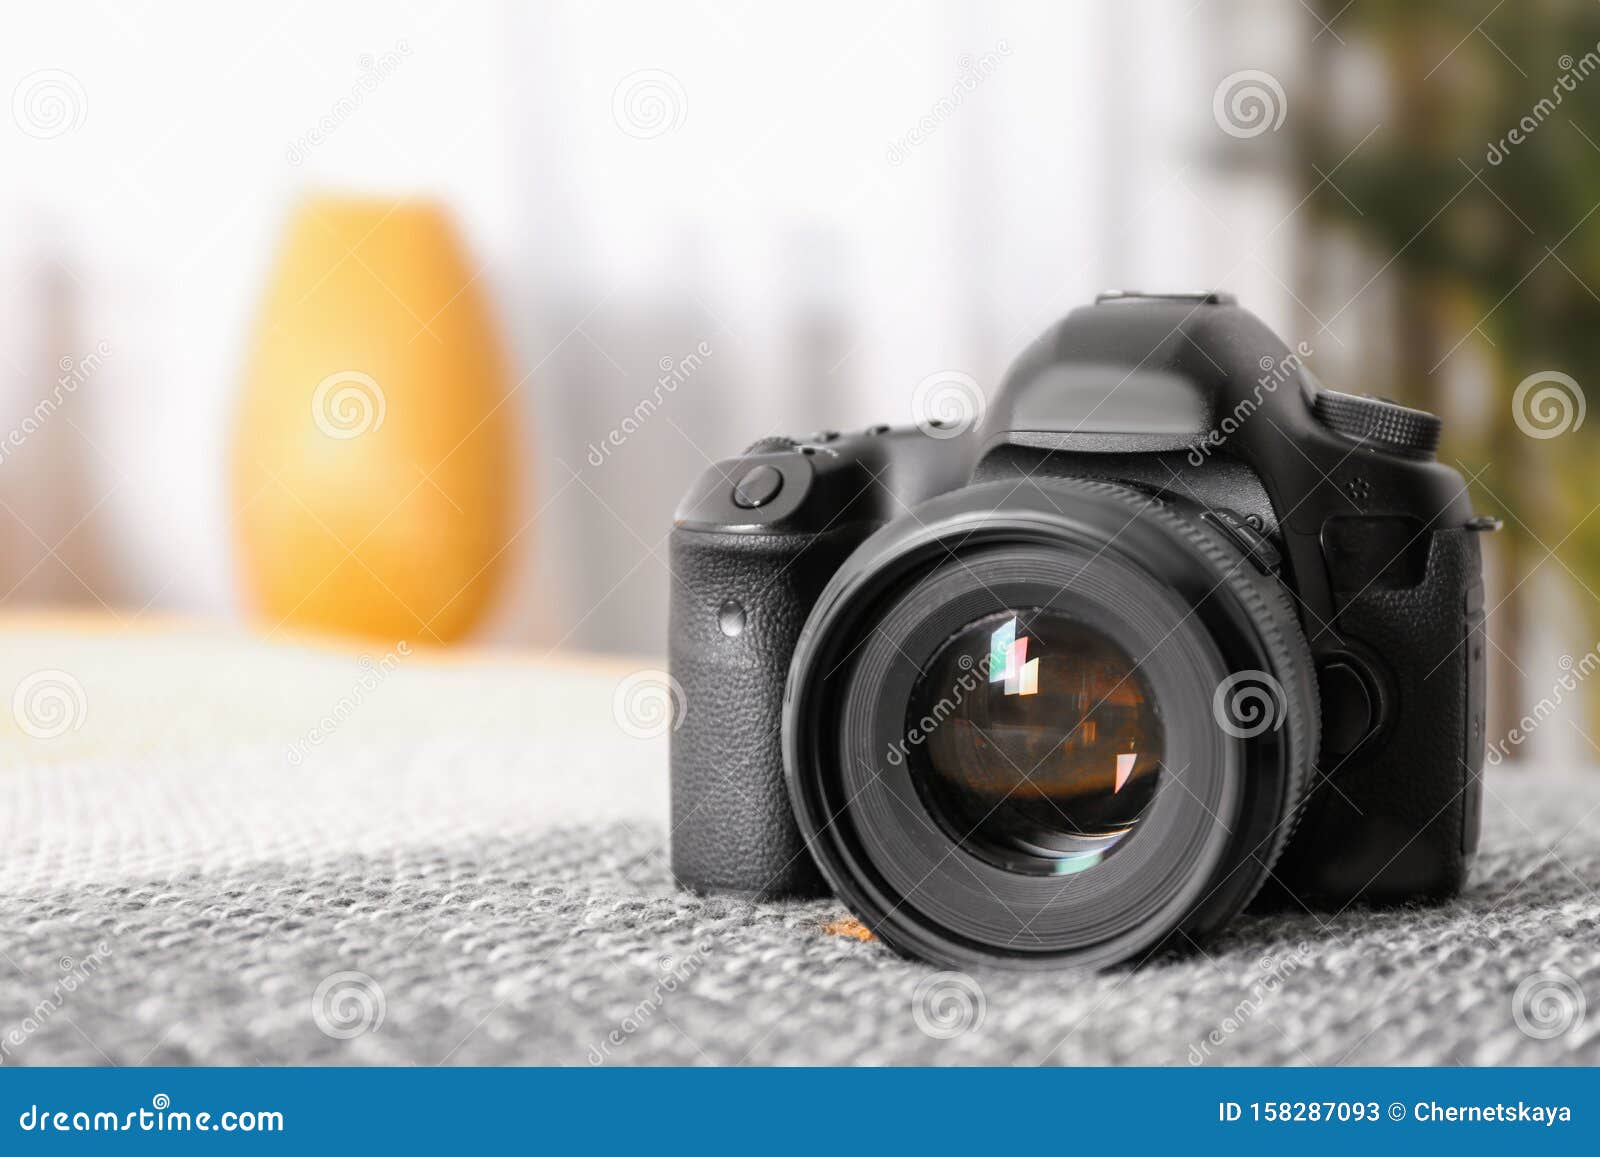 Professional Digital Camera Against Blurred Background Stock Image ...